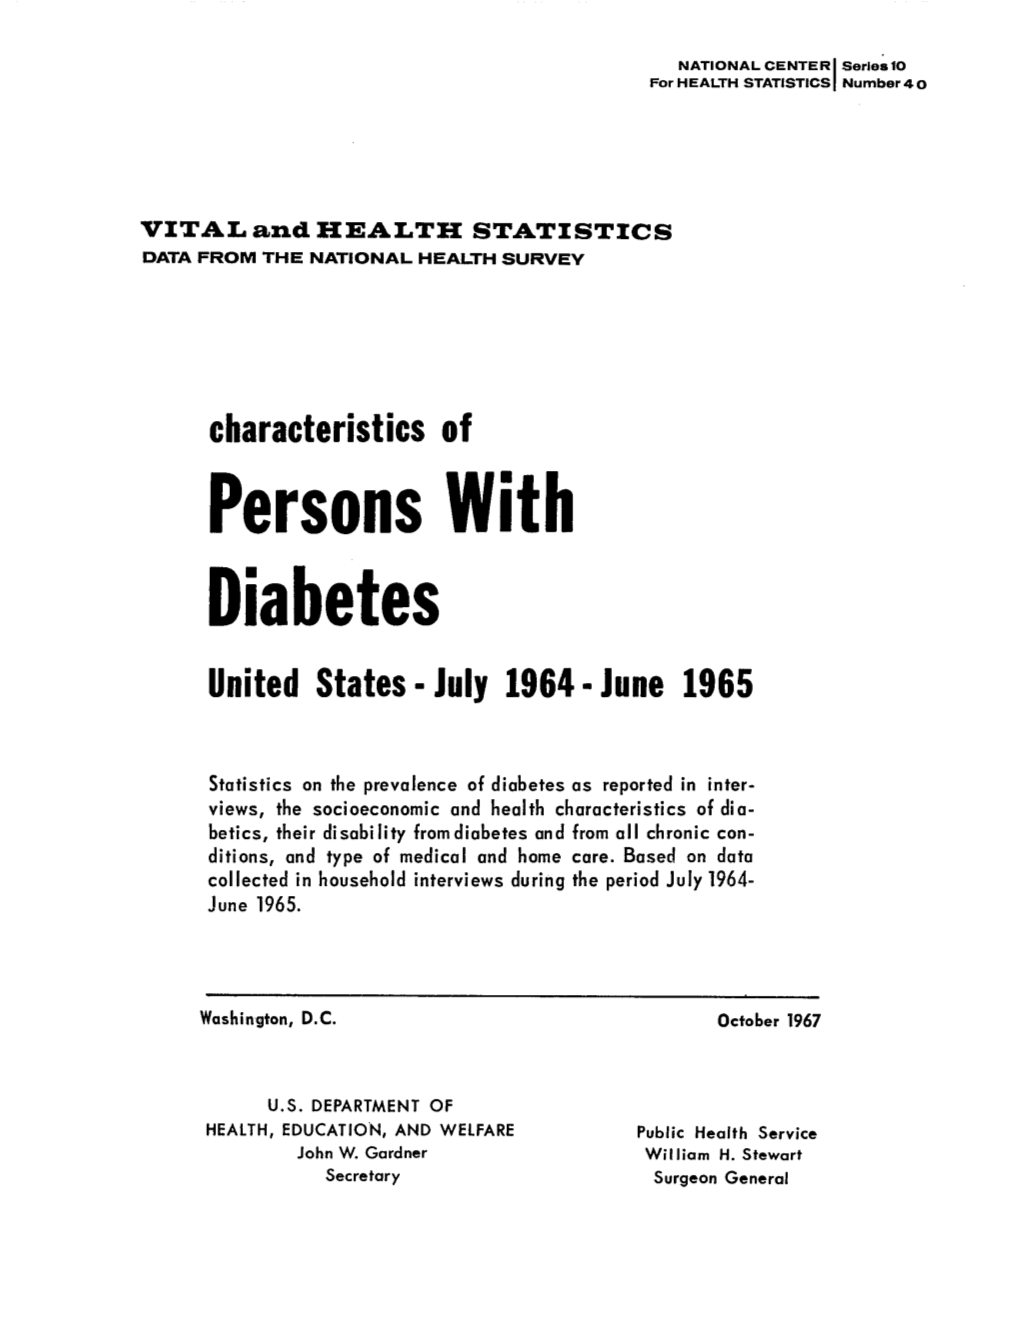 Vital and Health Statistics; Series 10, No. 40